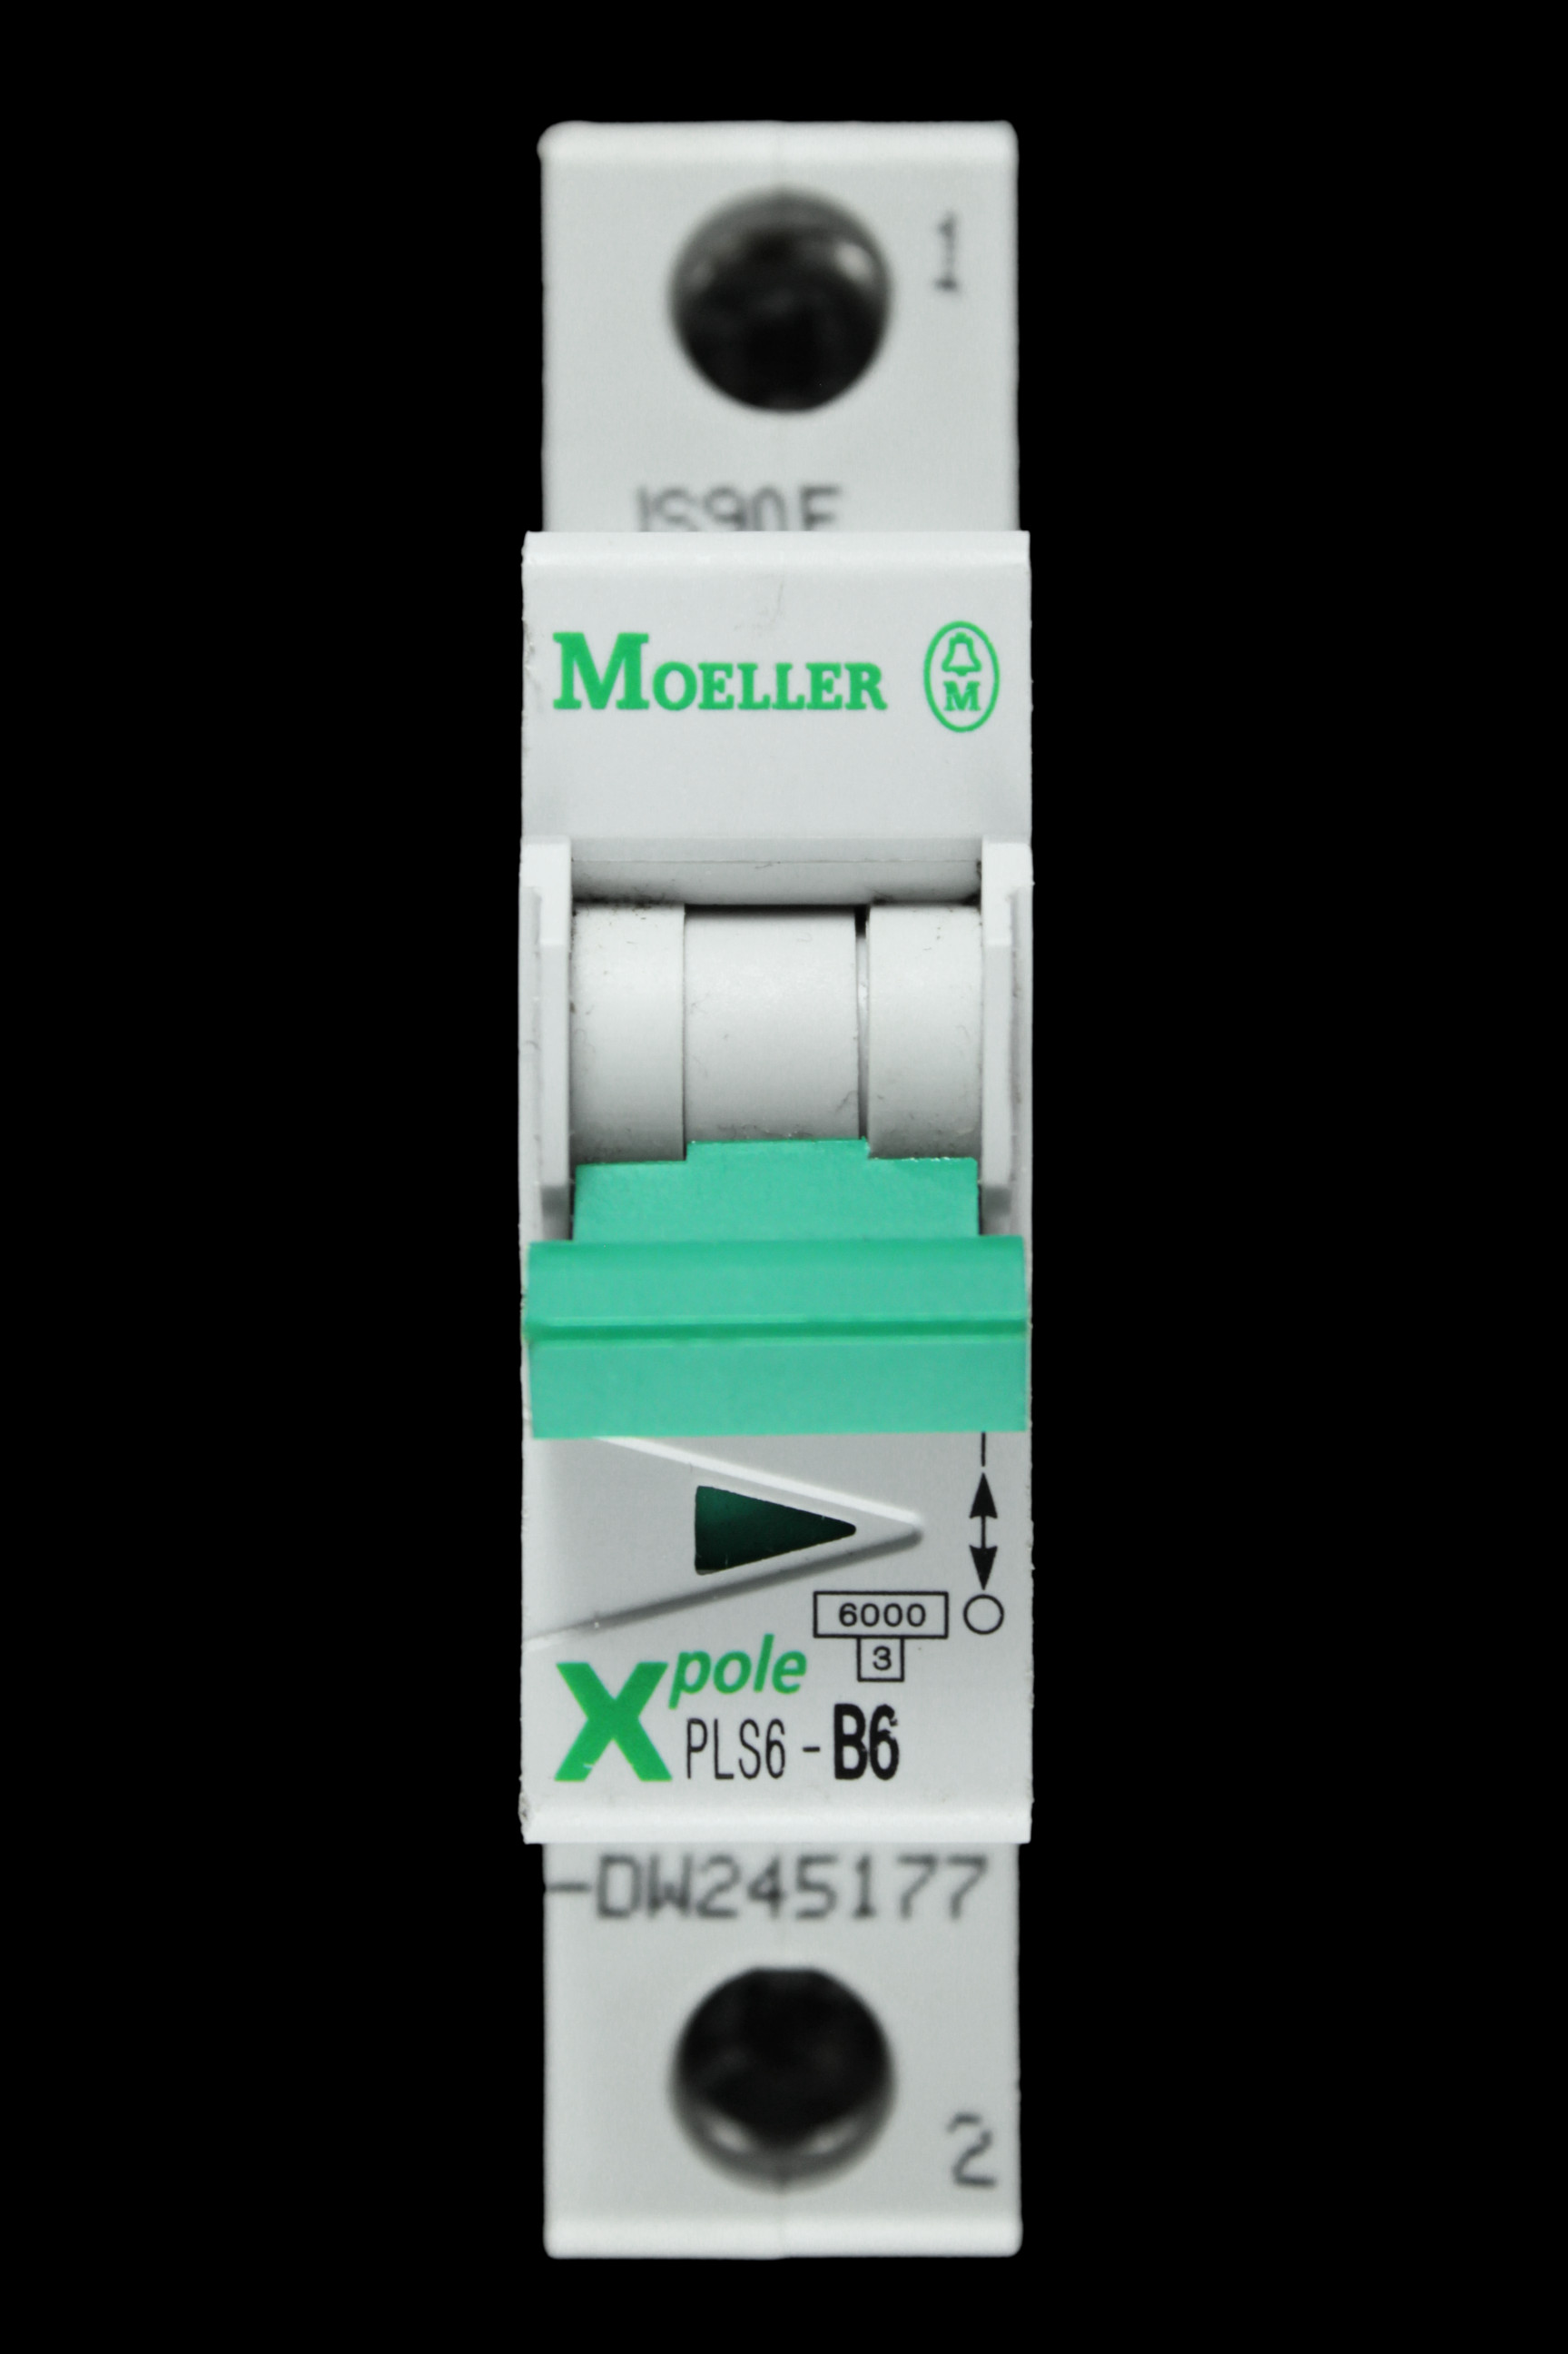 MOELLER 6 AMP CURVE B 6kA MCB CIRCUIT BREAKER XPOLE PLS6-B6